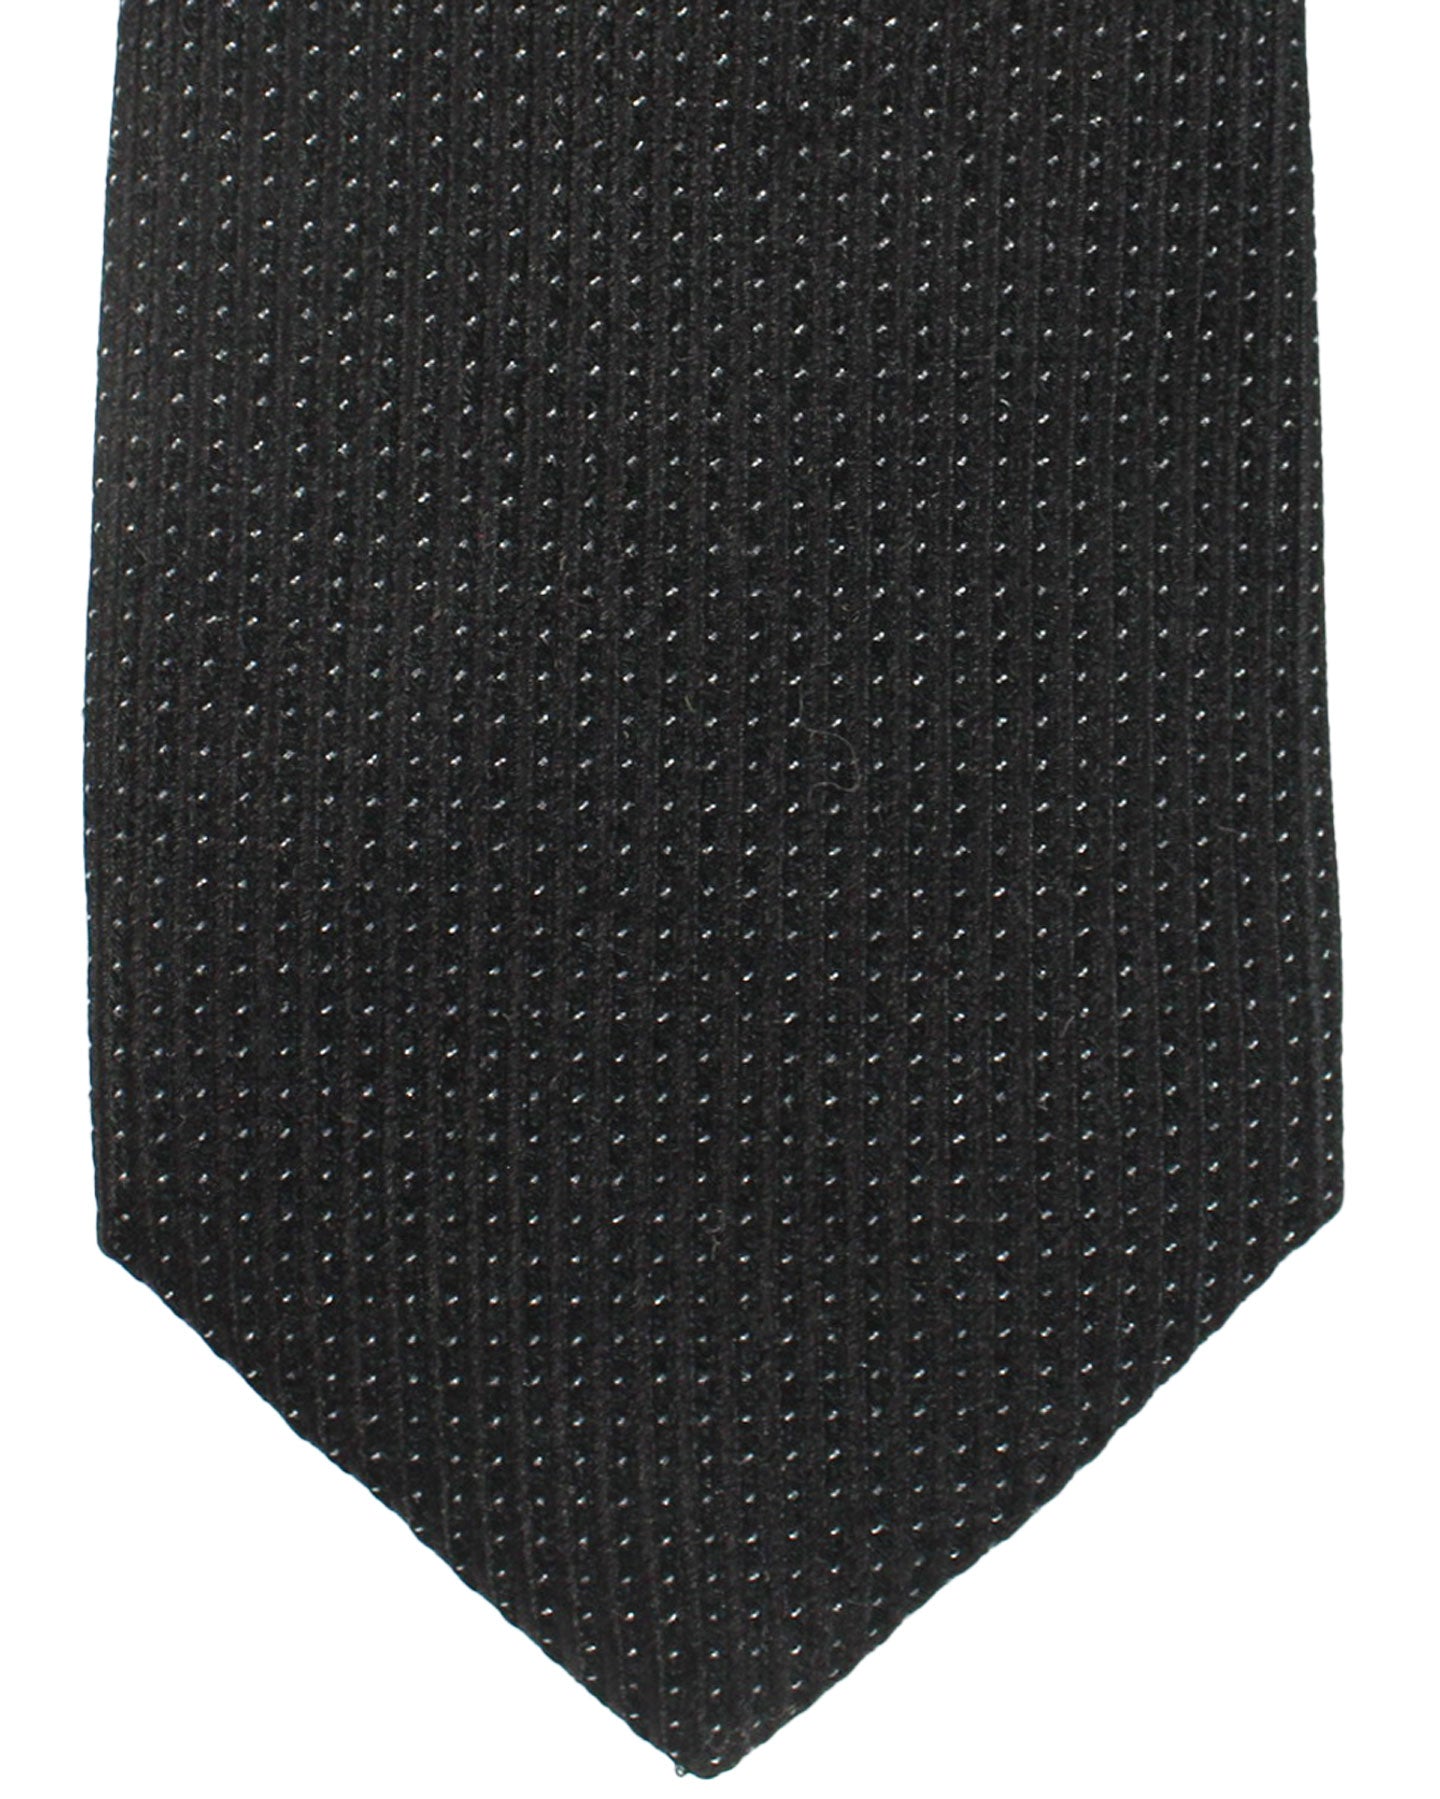 Ungaro Silk Tie Black Silver Design - Narrow Cut Designer Necktie